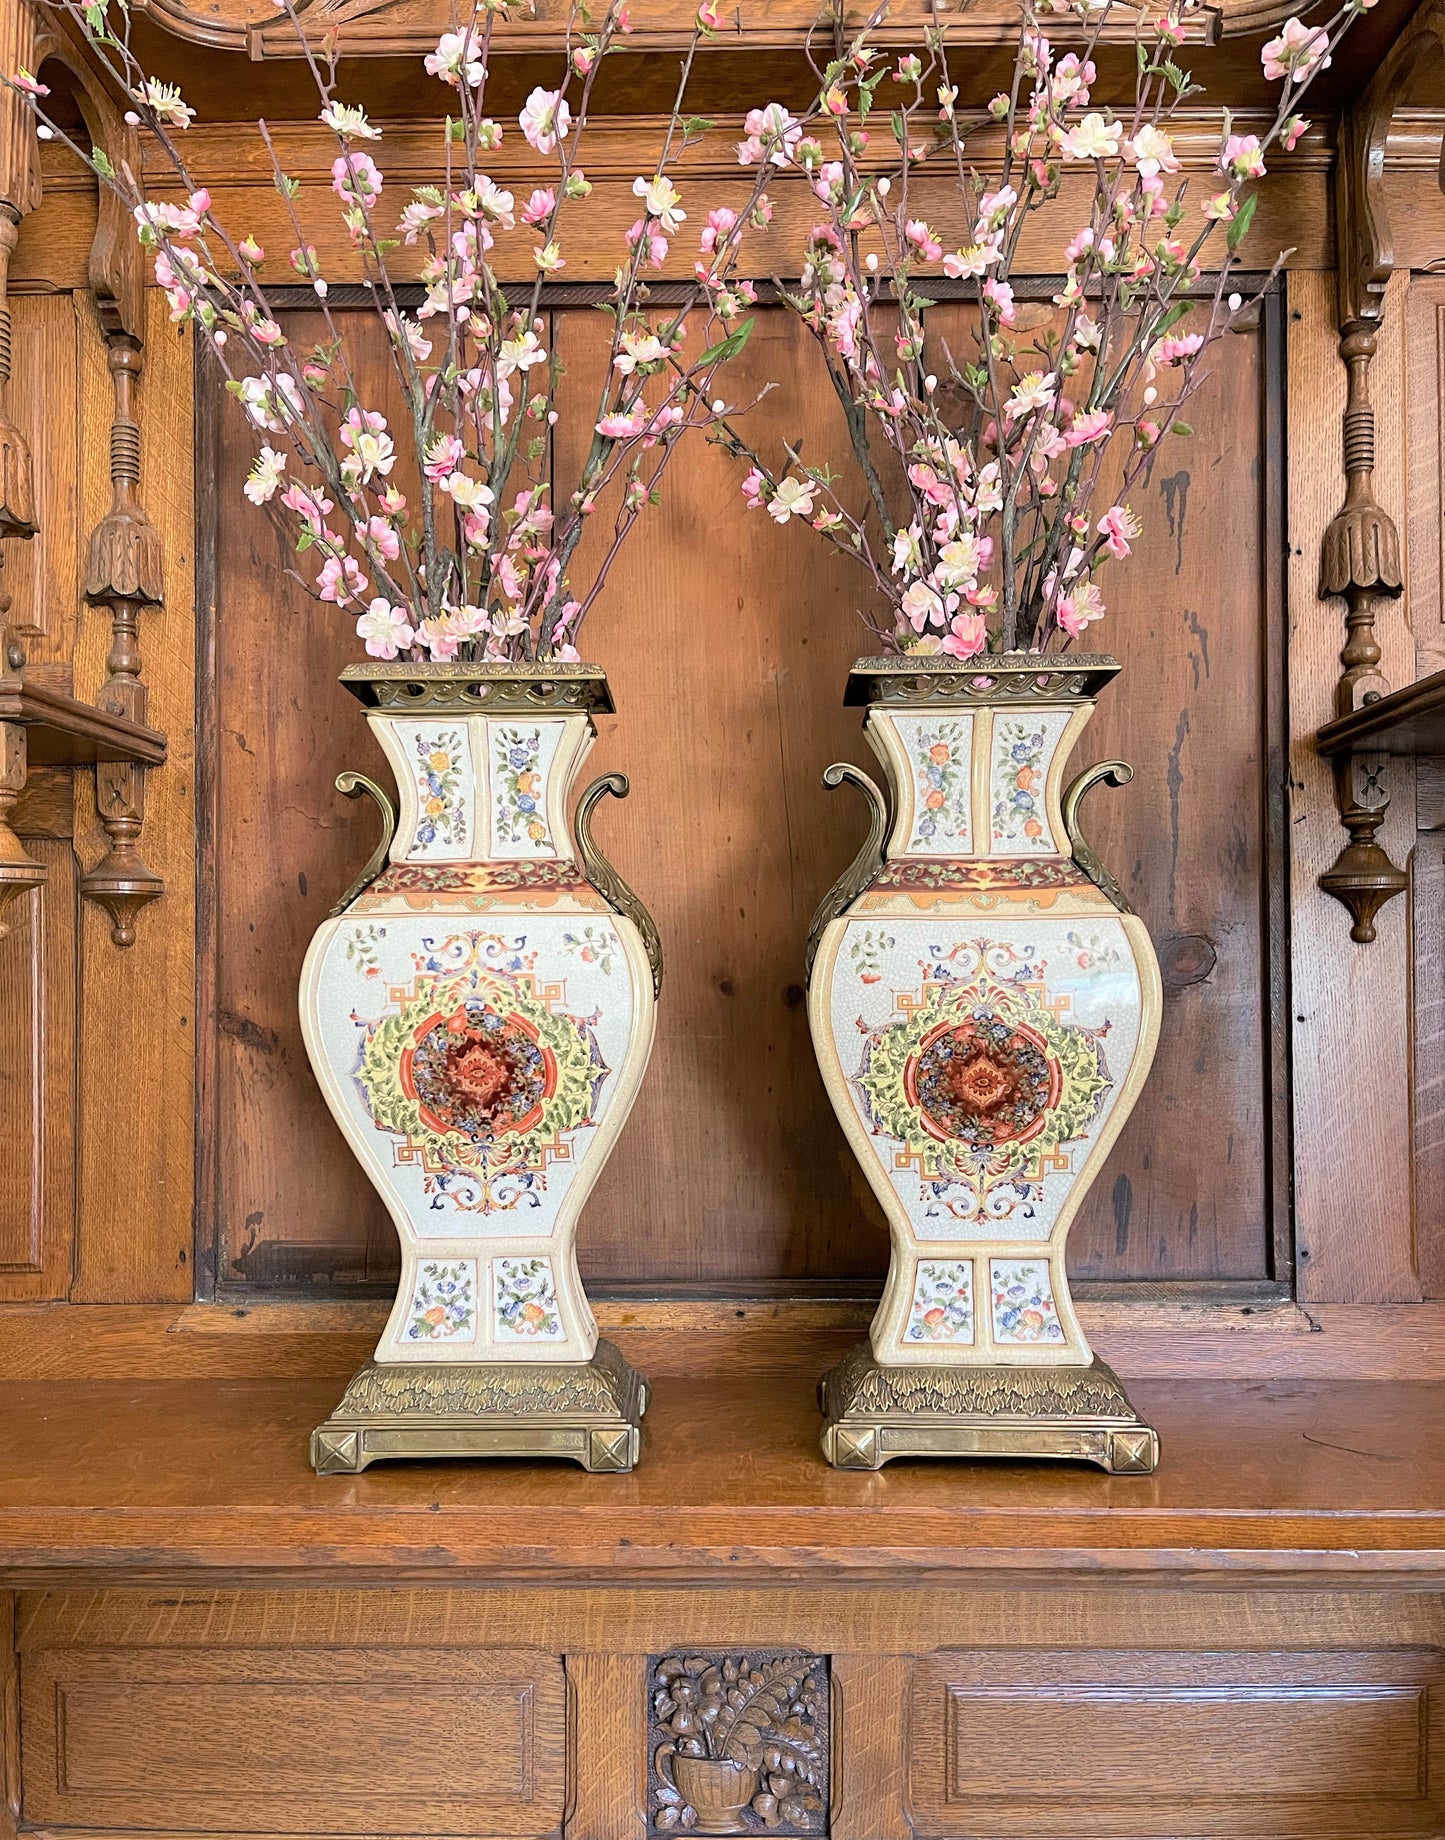 Vintage Castillian Ormolu Urns, Sold as a Pair, Stately Mantle Table Shelf Decor, Heavy